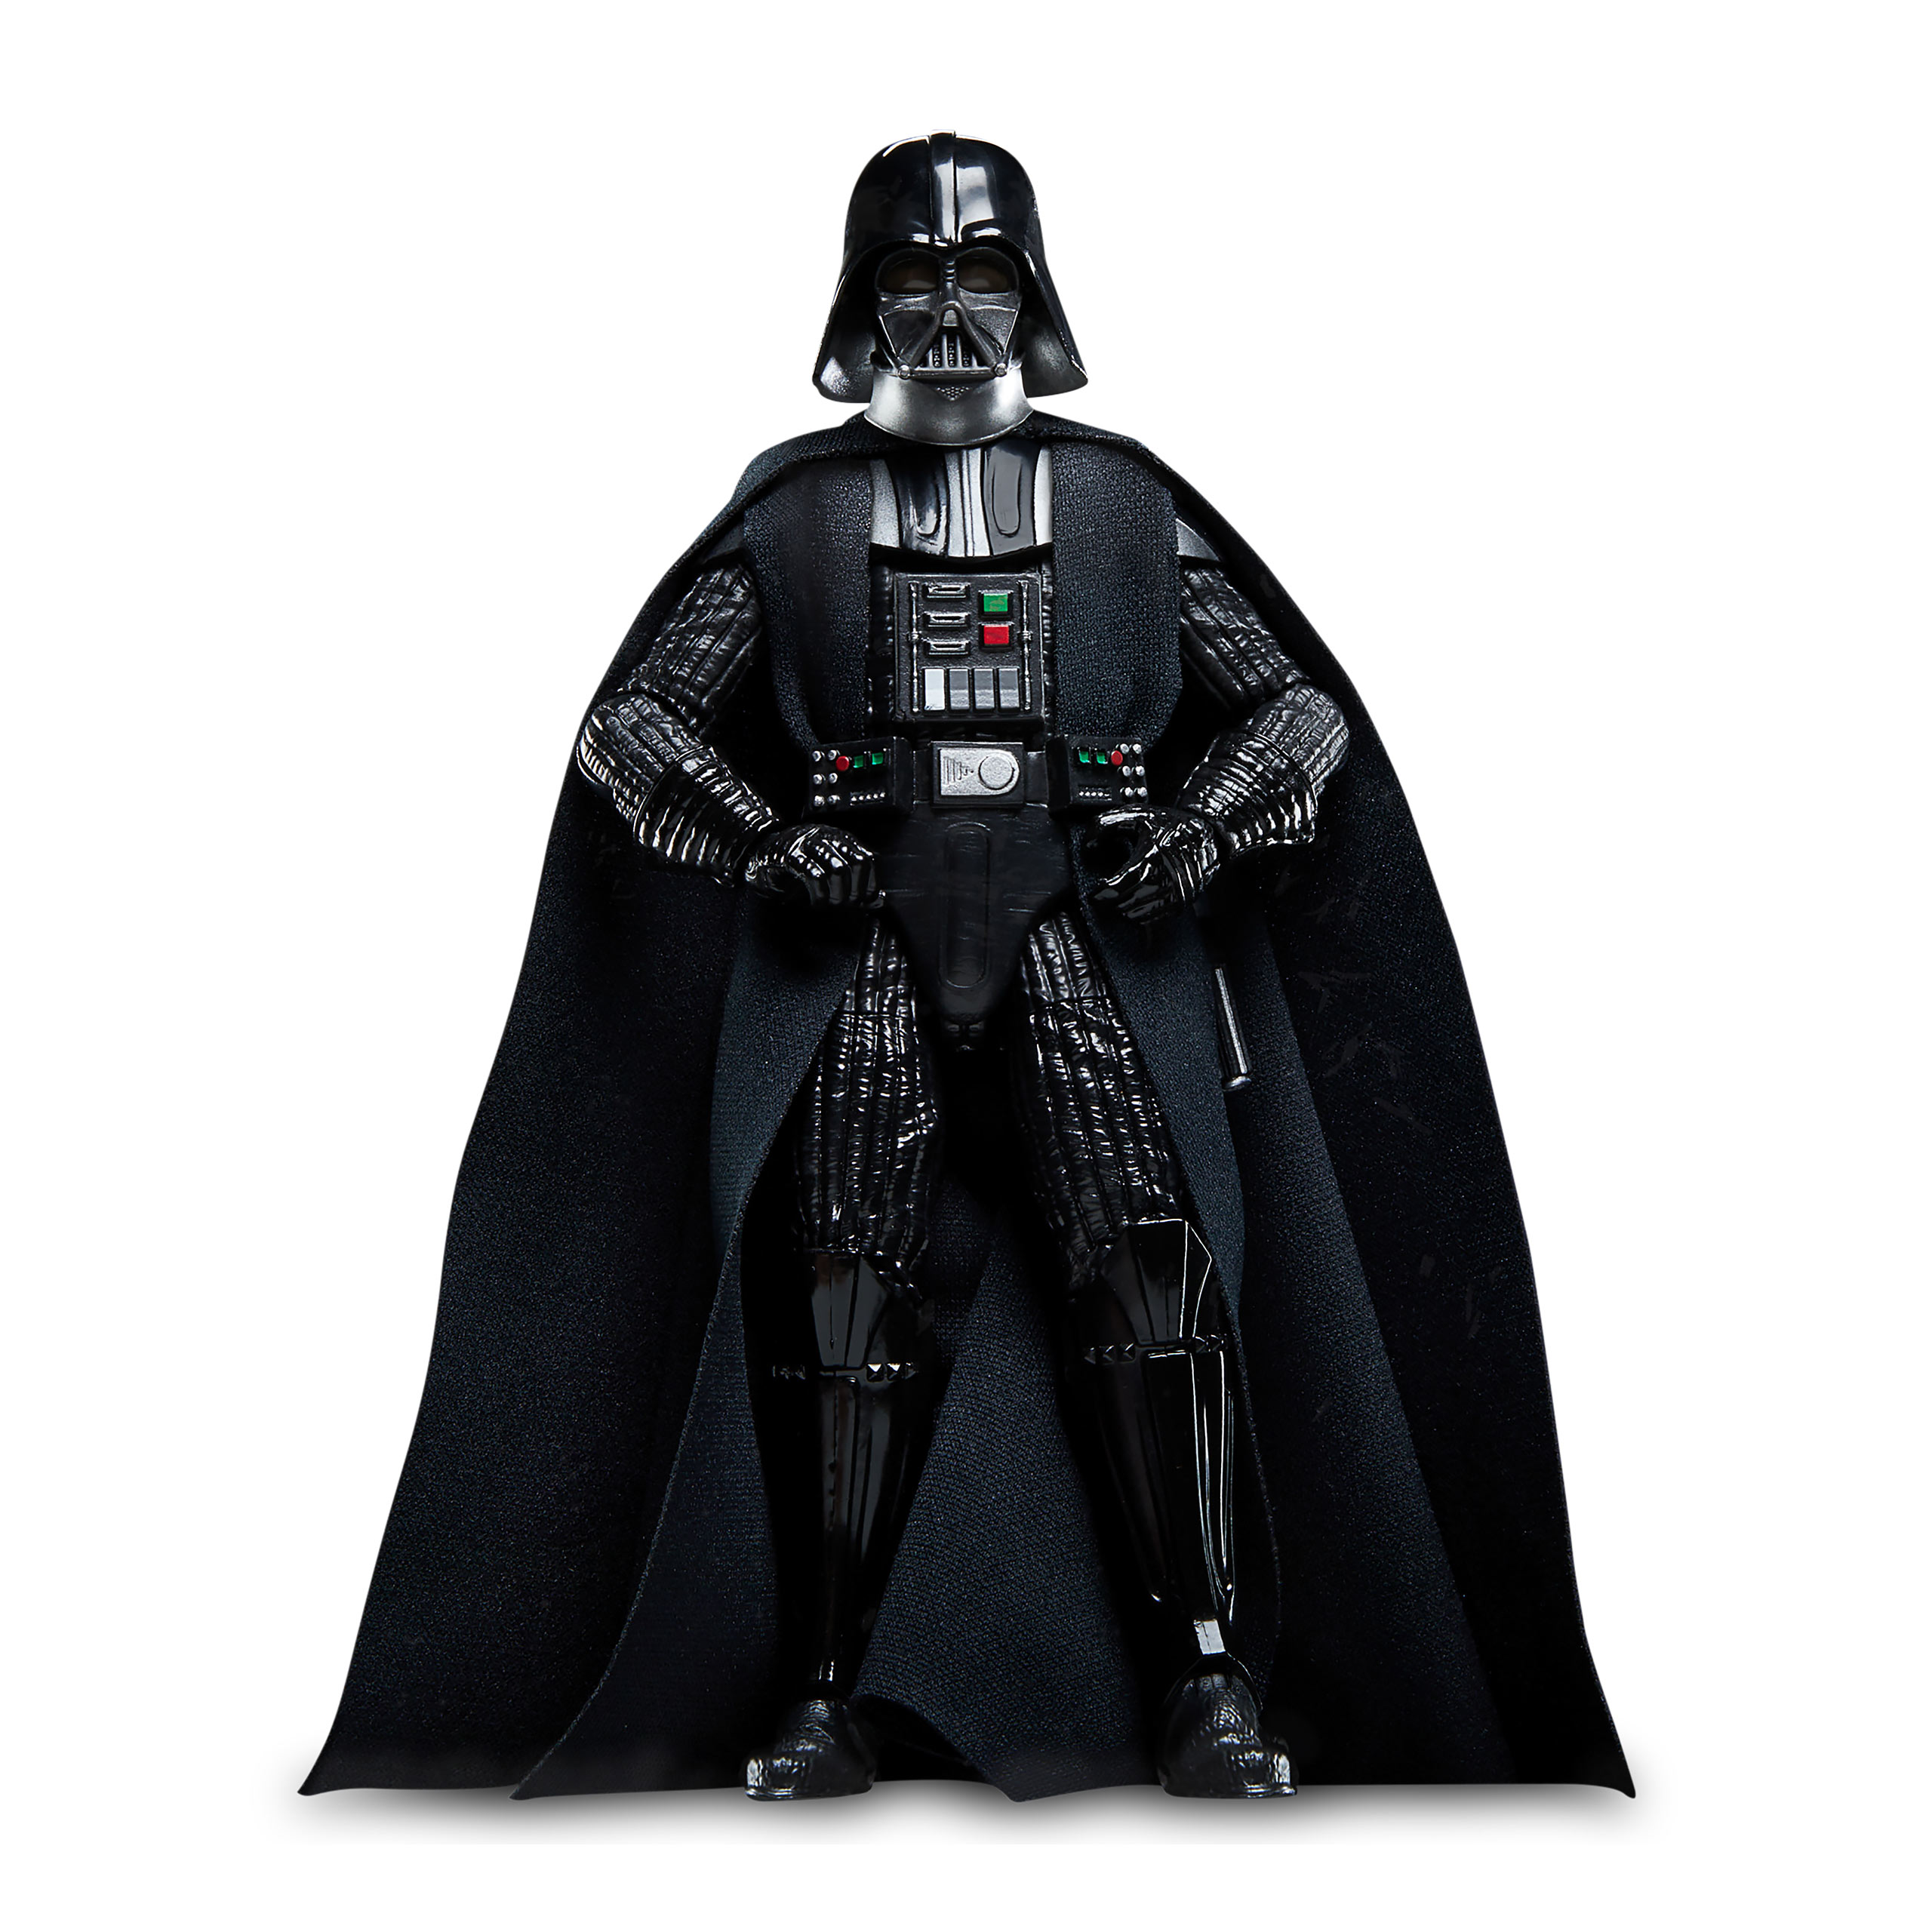 Star Wars - Darth Vader with Lightsaber Black Series Action Figure